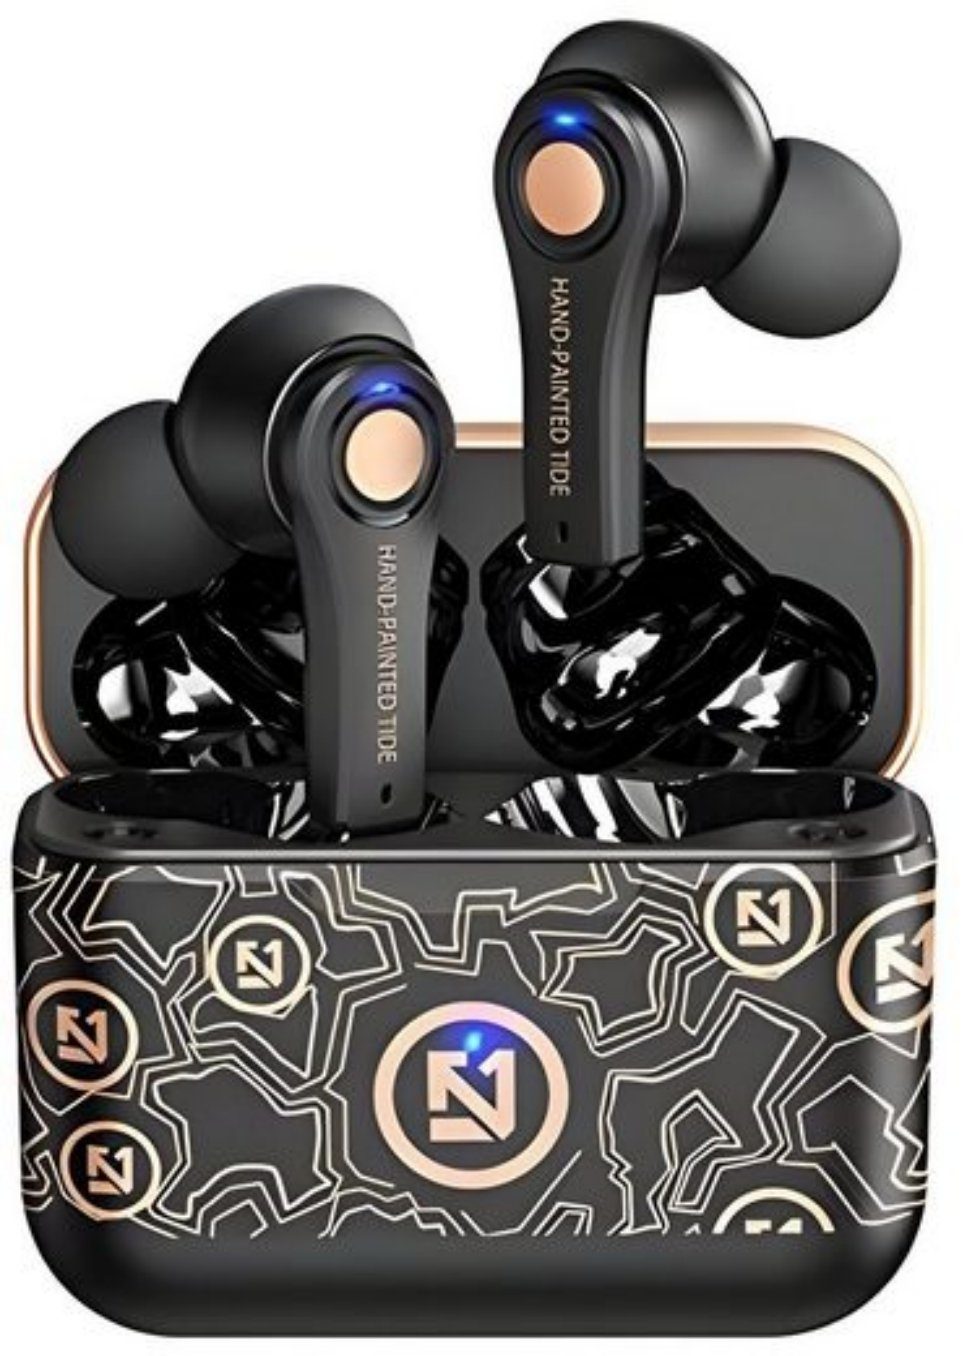 Mpow Kopfhörer online kaufen » Mpow Headphones | OTTO